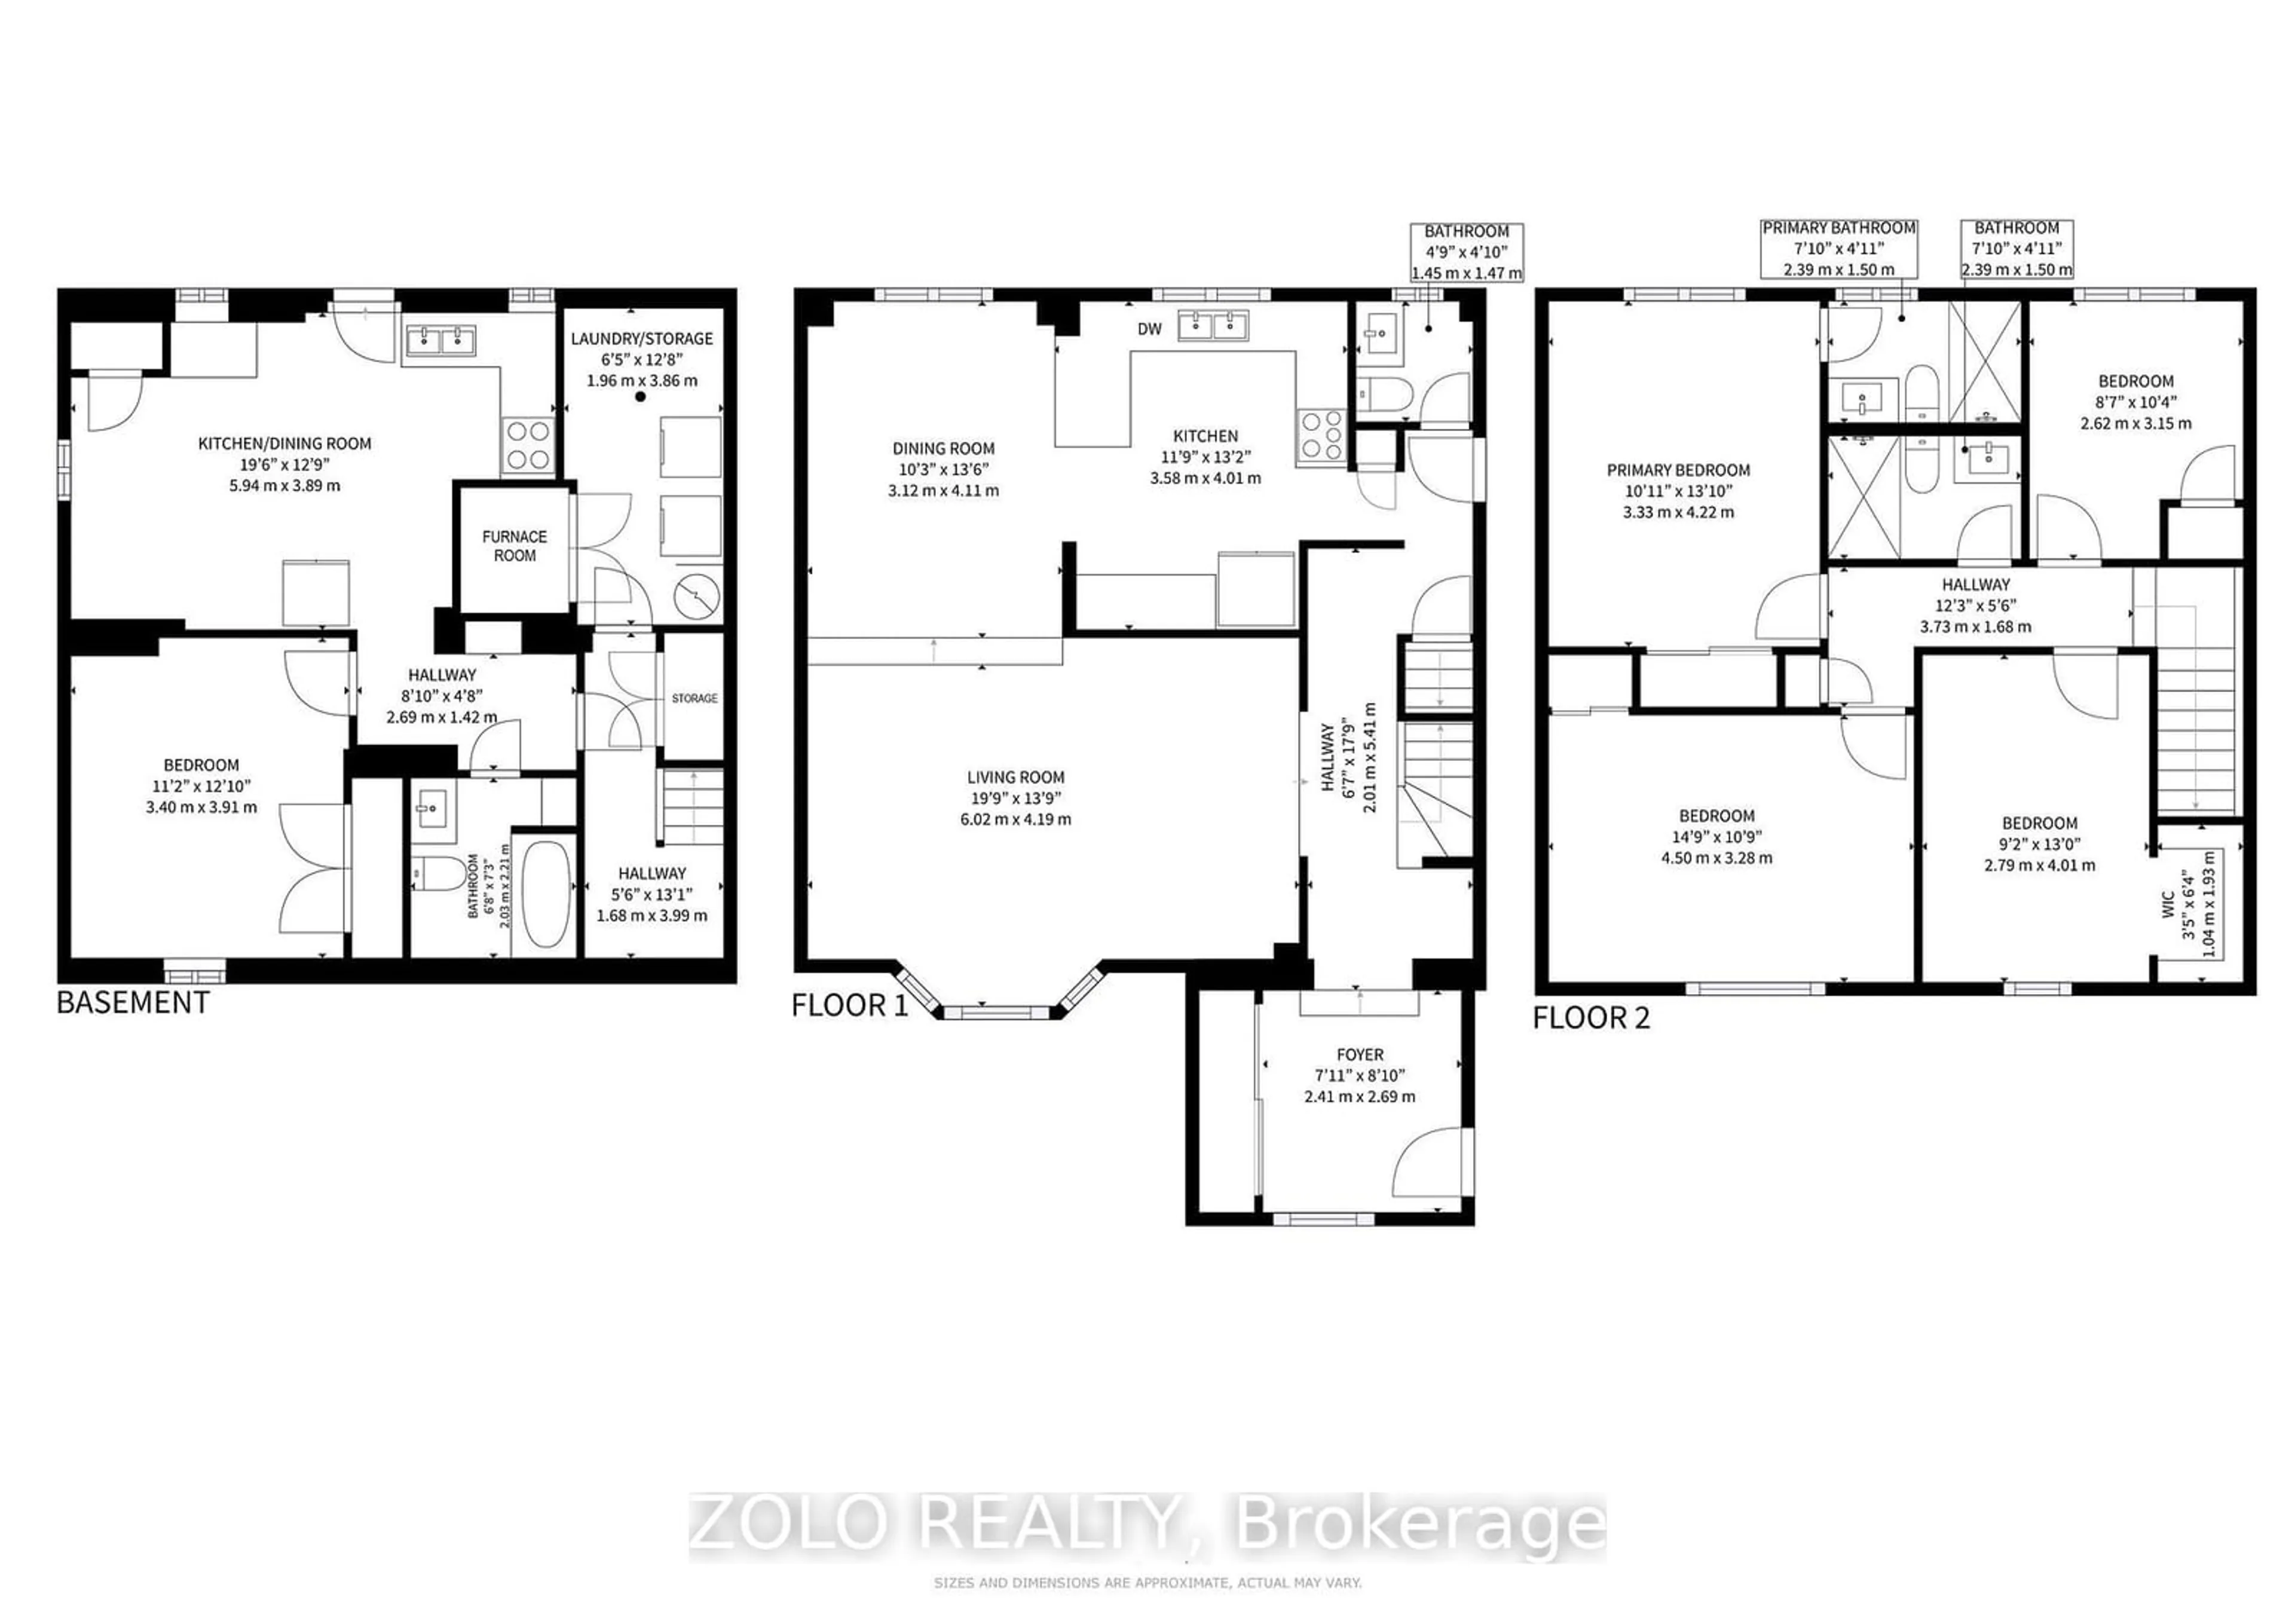 Floor plan for 352 Balmoral Dr, Brampton Ontario L6T 1V9